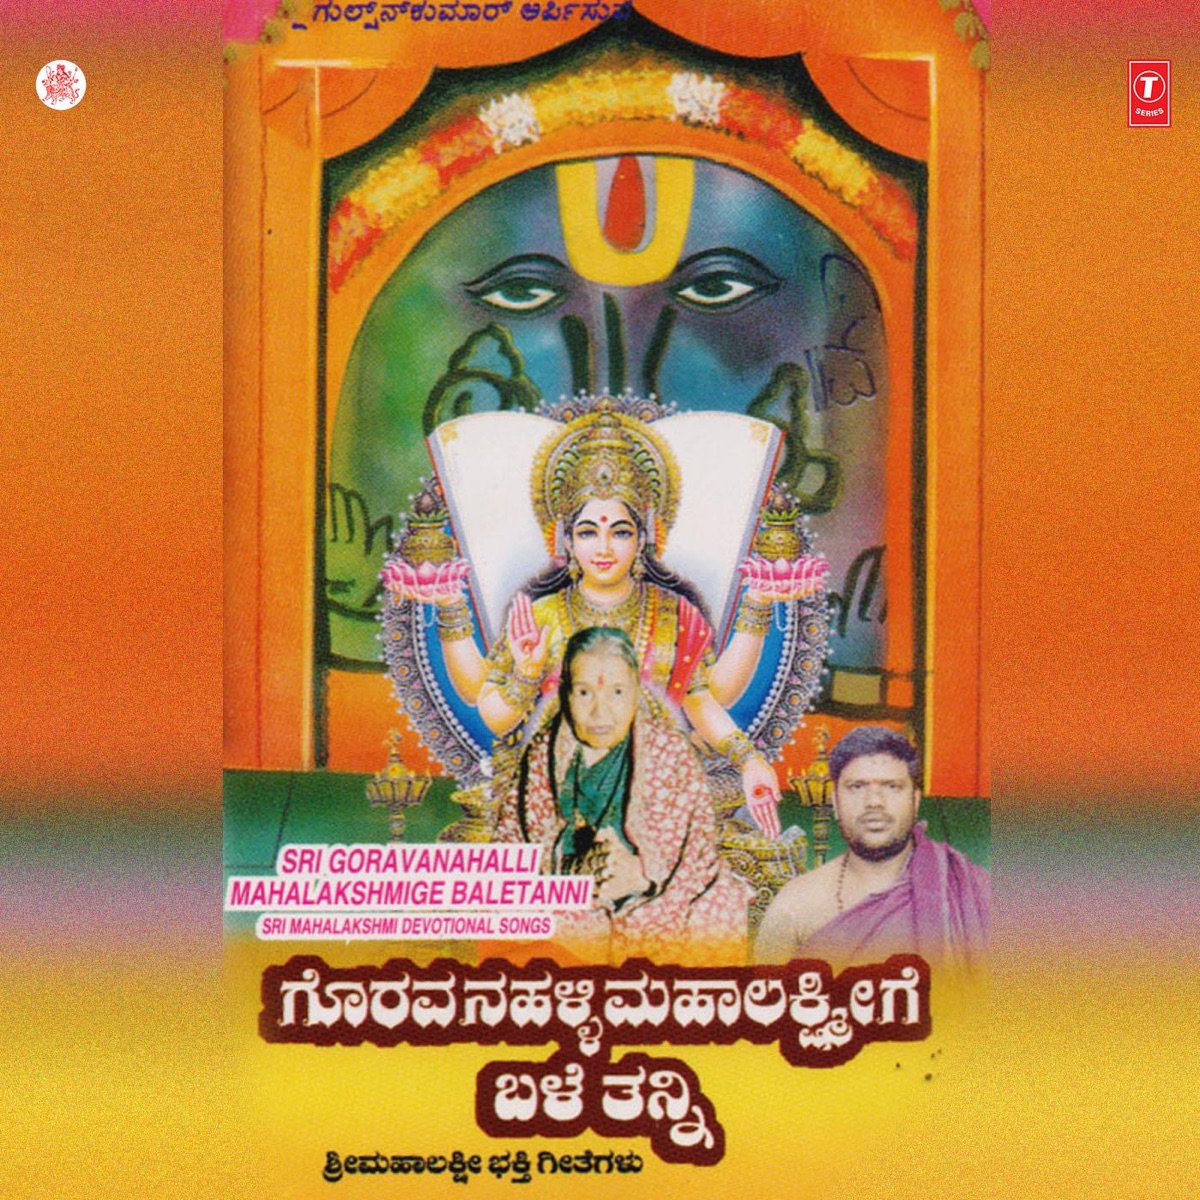 Kinnari by B.R.Chaya on Apple Music